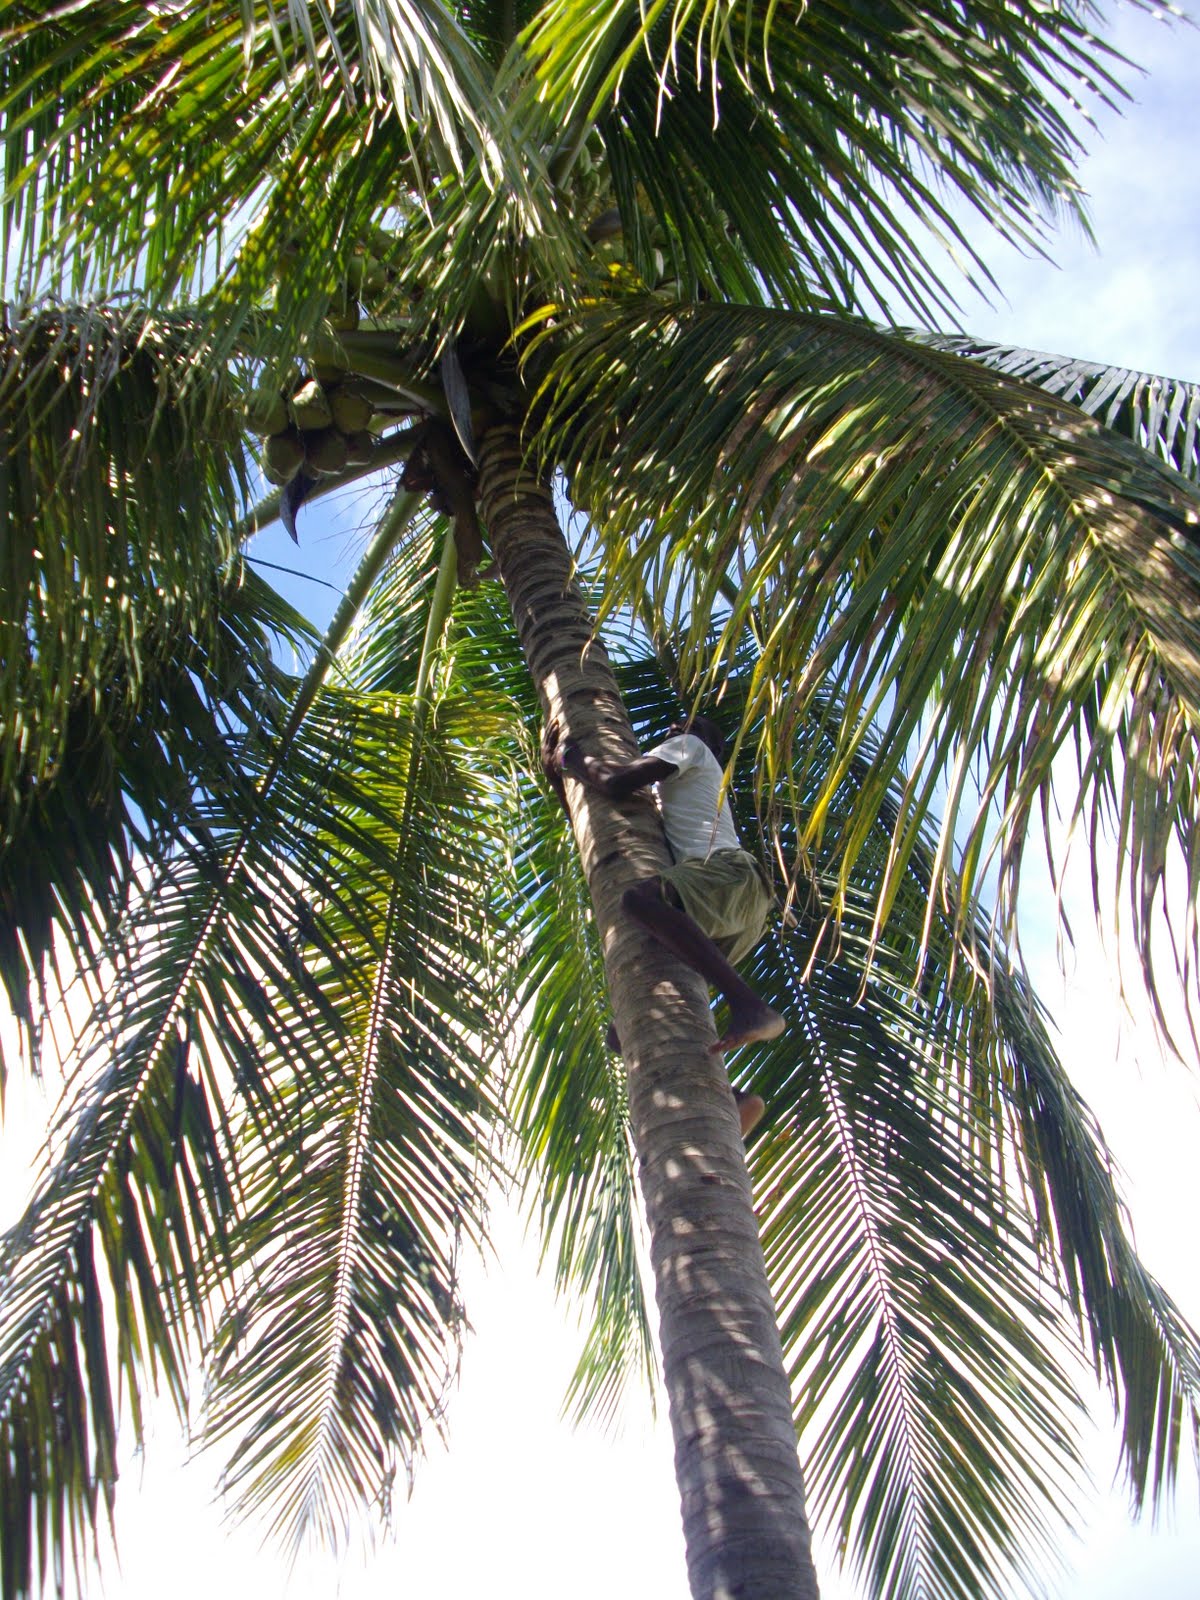 My Two Mites: Leadership: Imitation, climbing the coconut tree